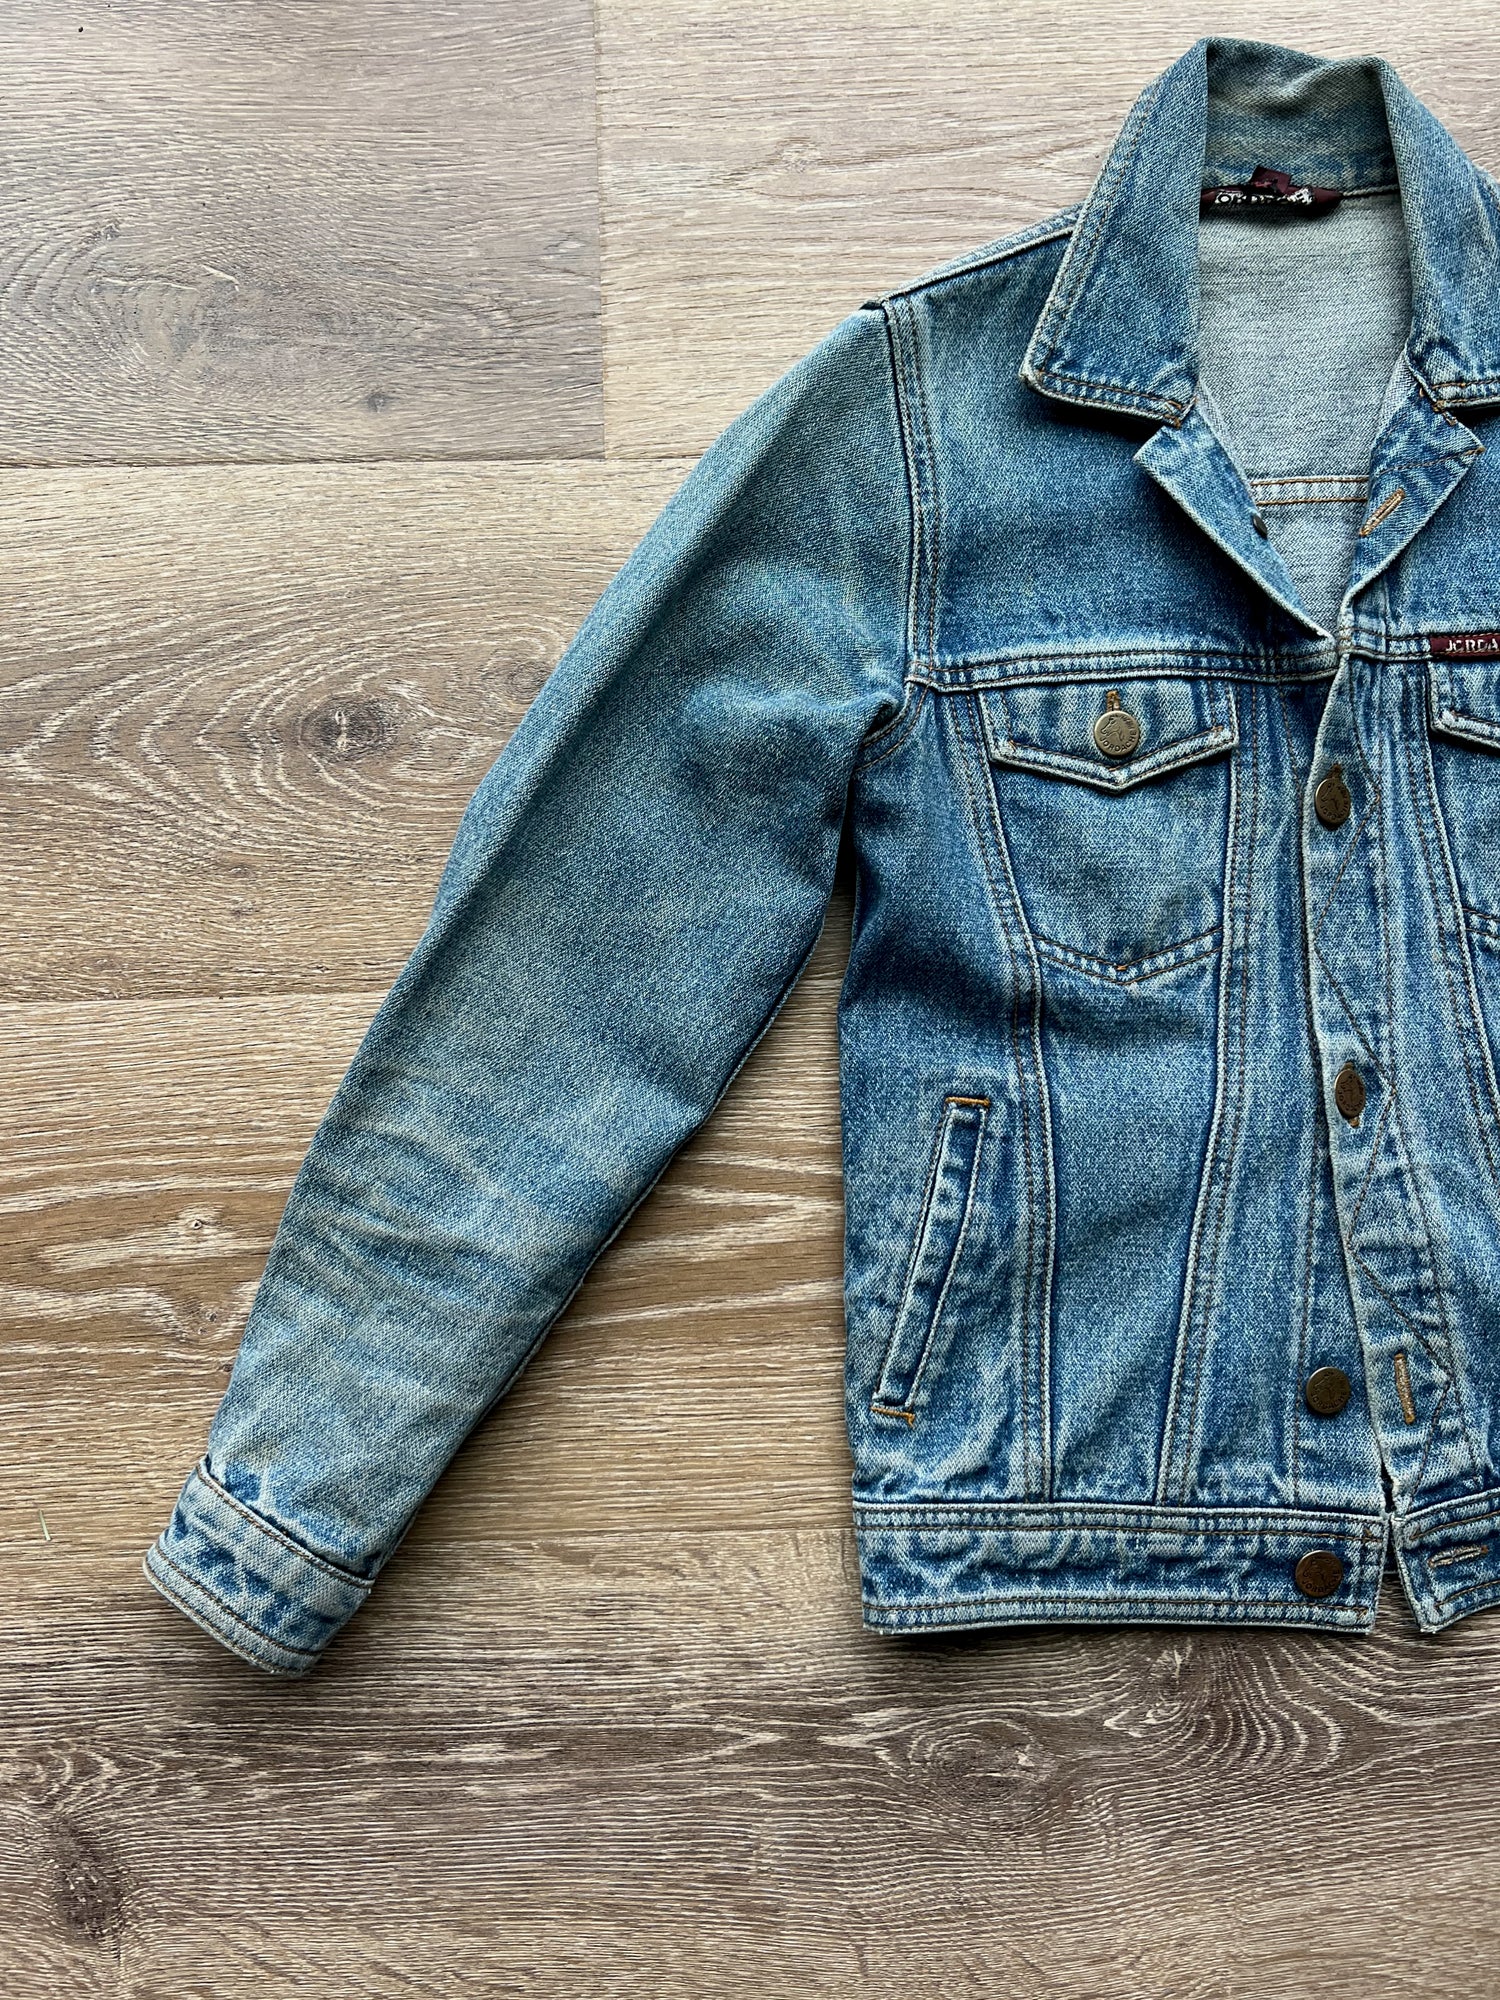 Men Denim Jacket . Vintage 80s Jeans Jacket Acid Wash Blue Denim Zip up  Bomber Jacket Coat Outerwear . Size Medium M - Etsy India